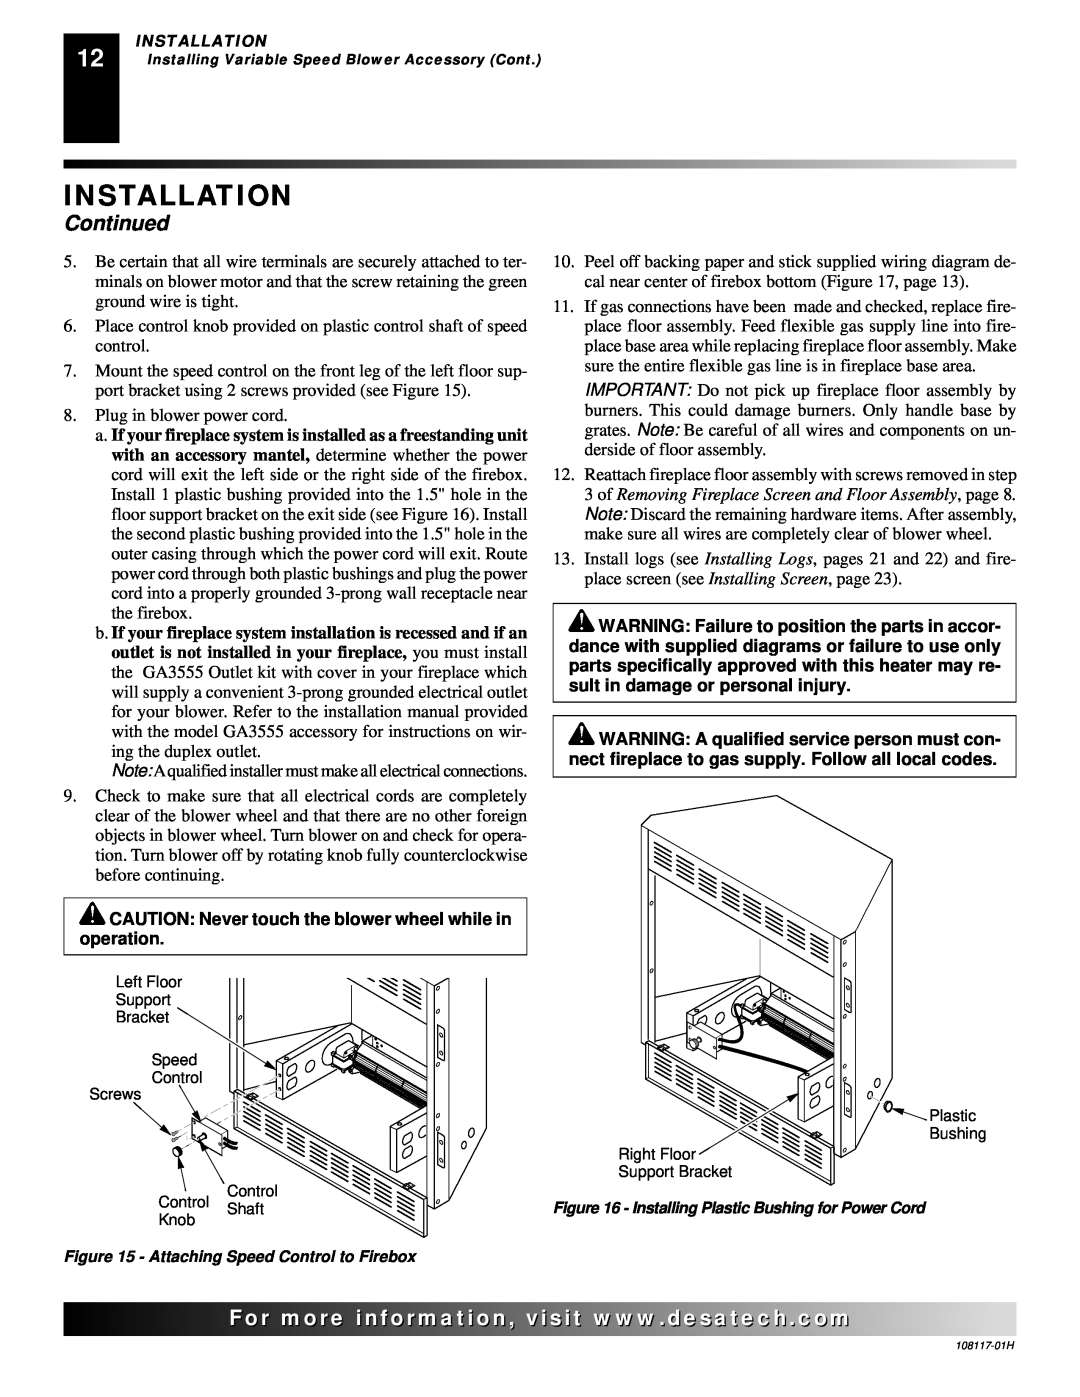 Desa EFP33NR, EFP33PR installation manual Installation, Continued, Plug in blower power cord 